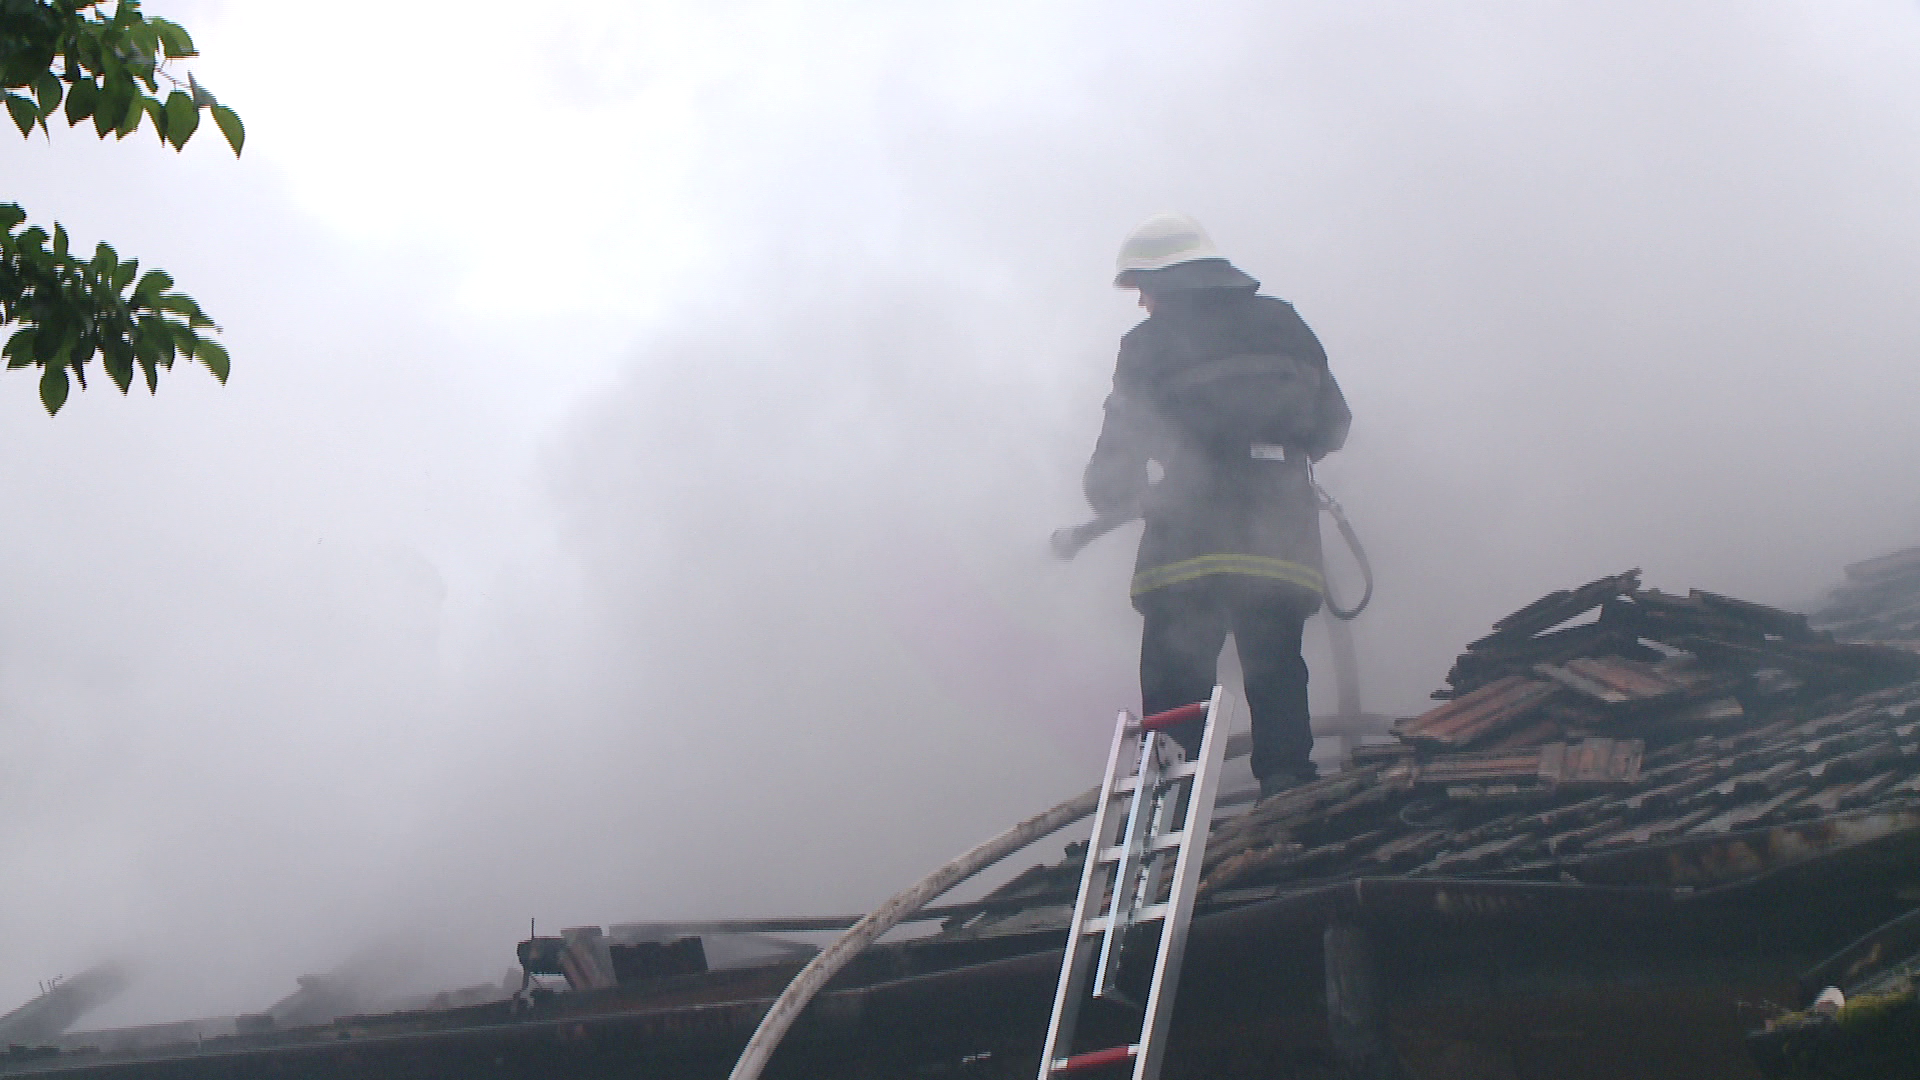 incendiu, pompier pe acoperis